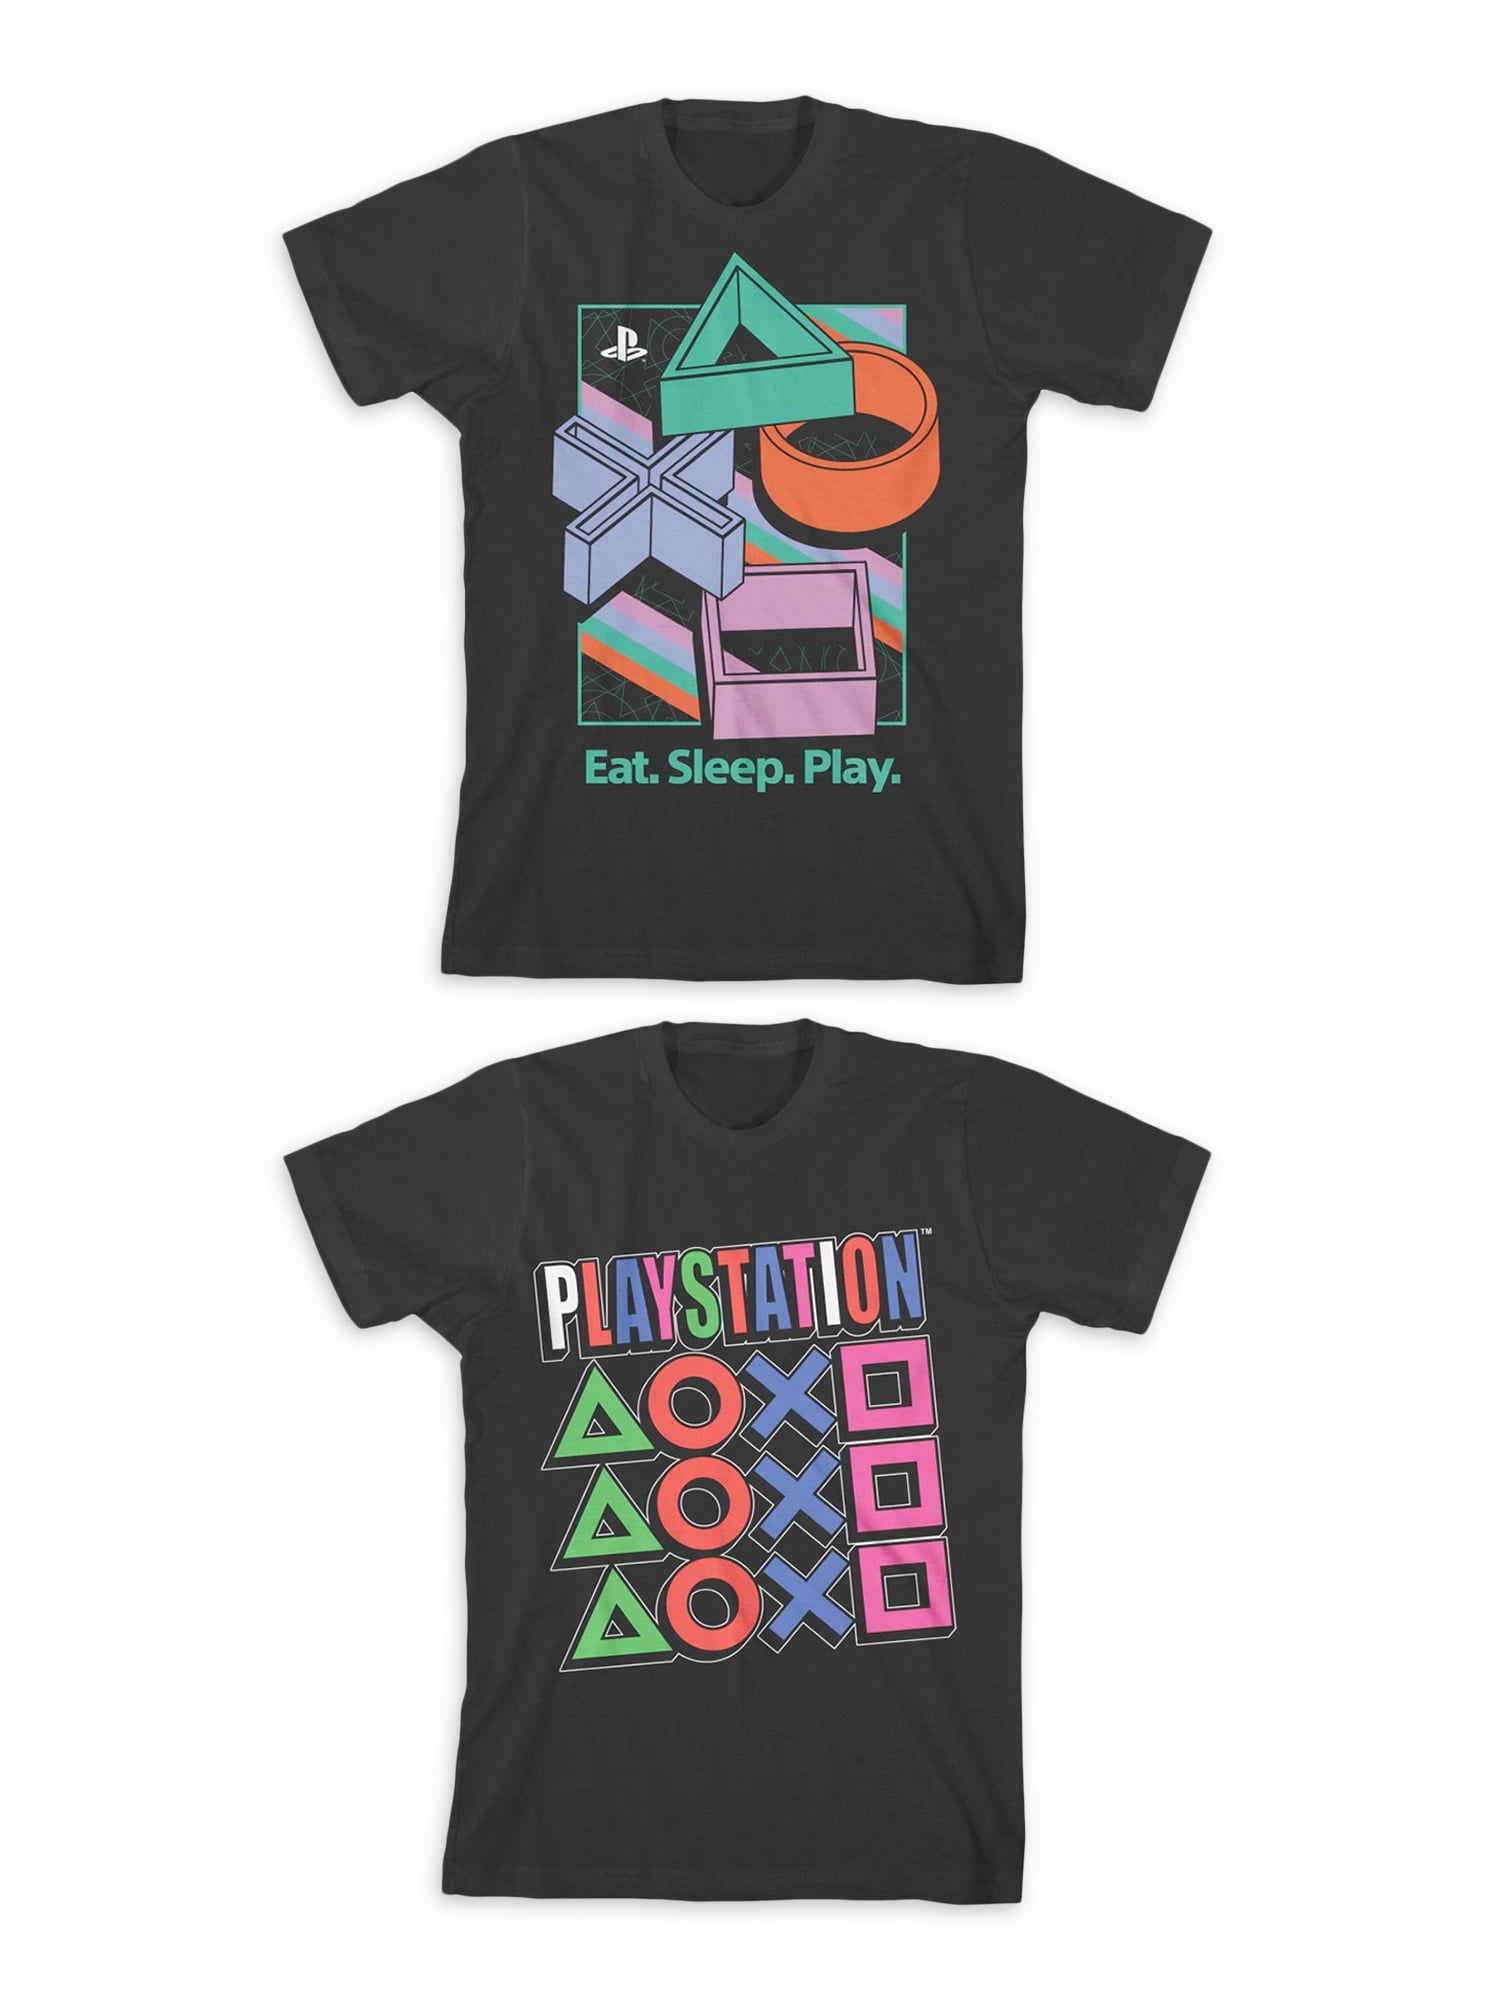 Boys Playstation Black T Shirt NEW Ex Chainstore N Kids 3-16 Years RRP £14 £17 